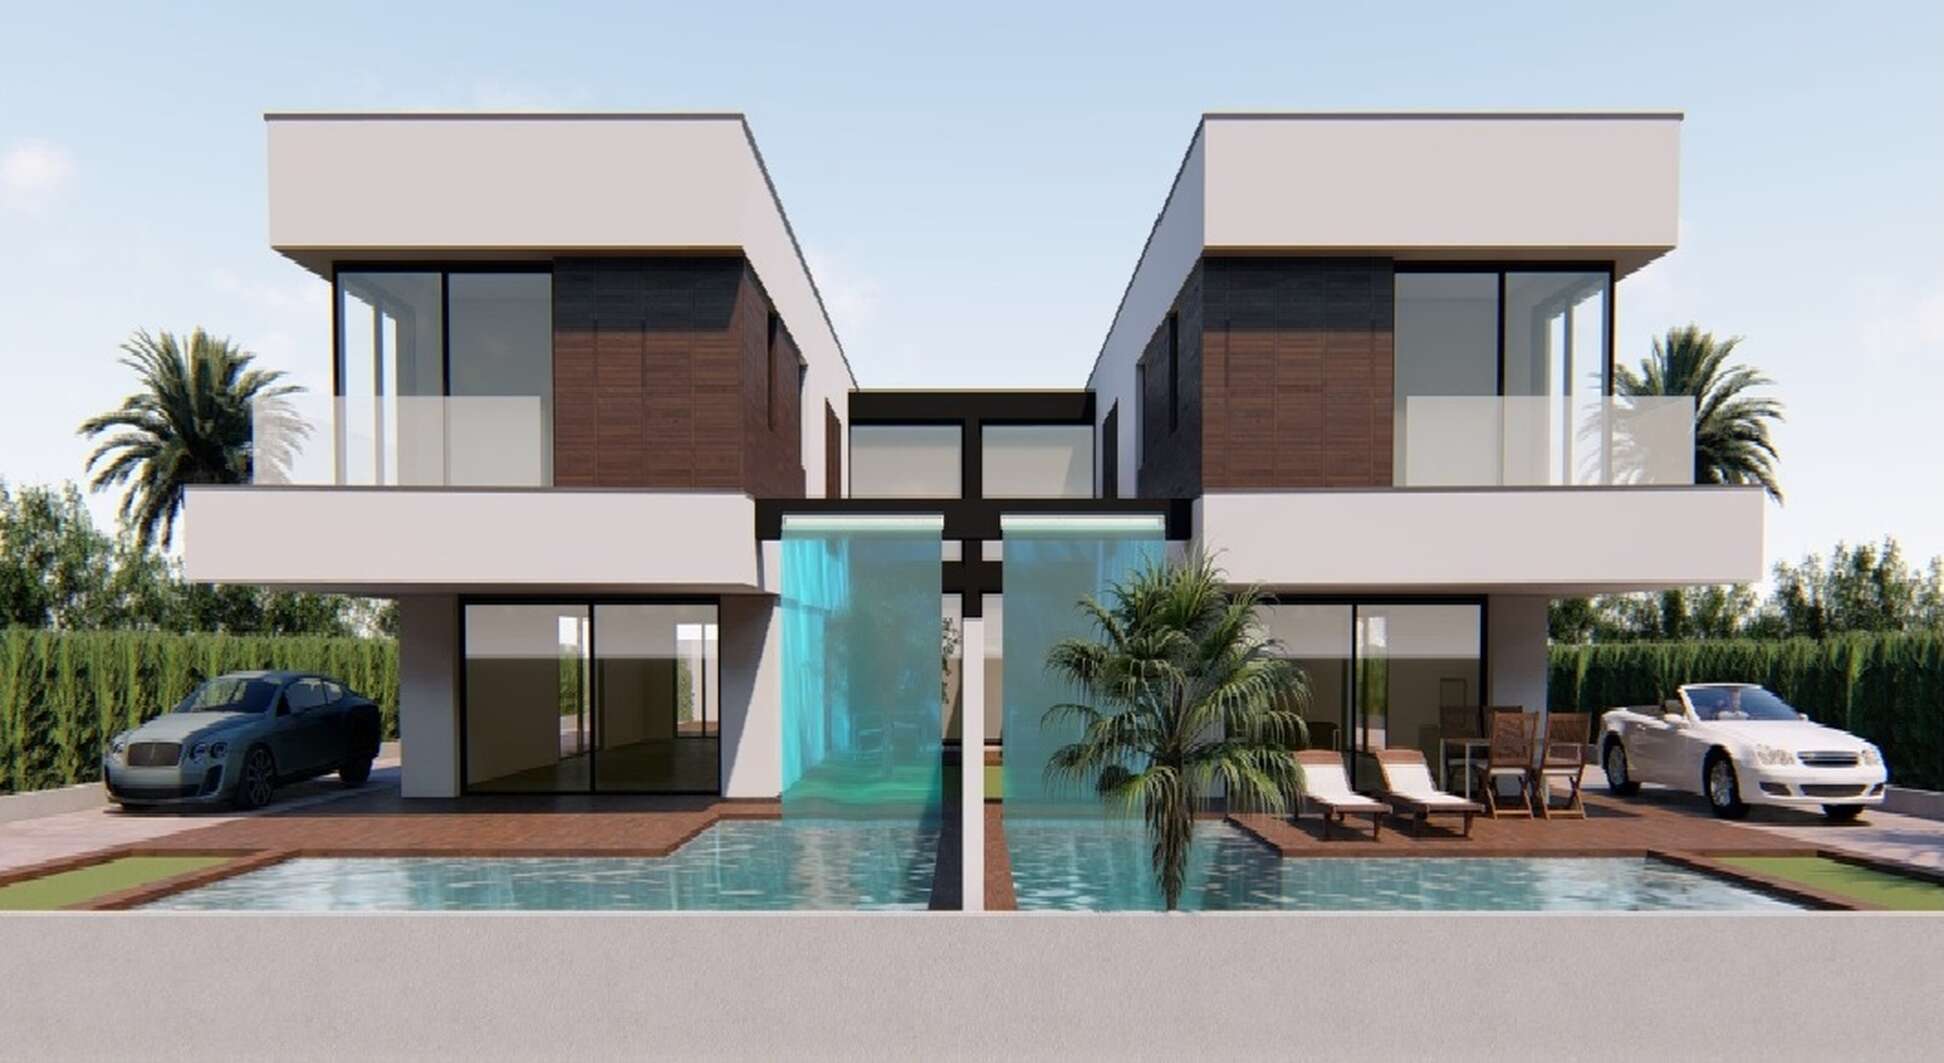 maison-nouveau-moderne-piscine-garage-vendre-empuriabrava-563